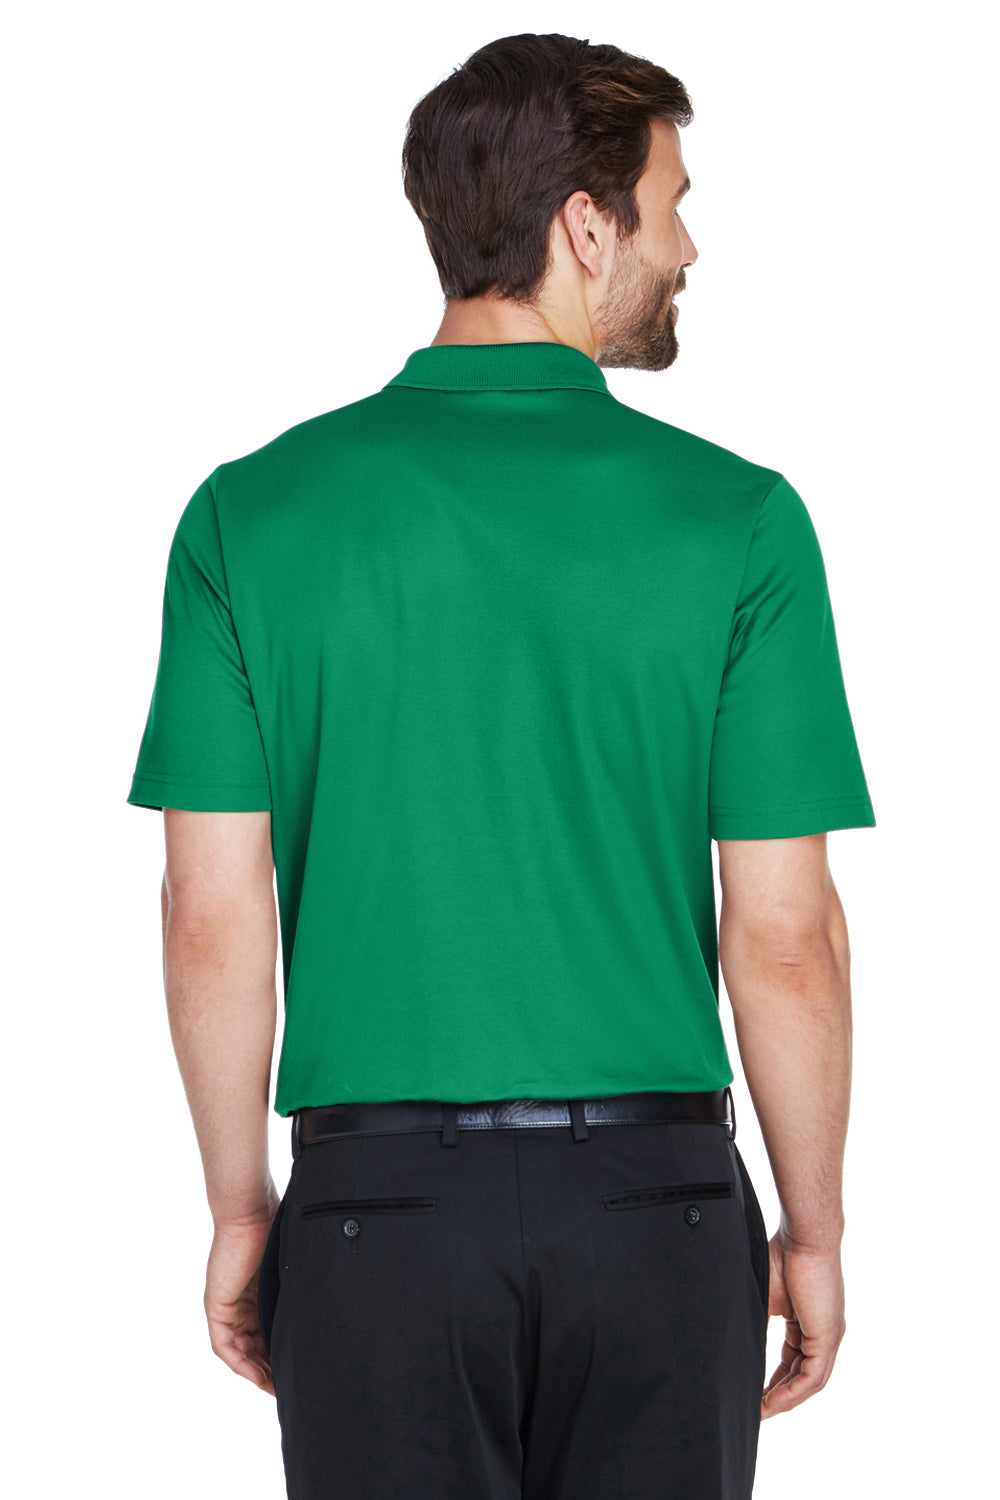 Devon & Jones DG20 CrownLux Performance Moisture Wicking Short Sleeve Polo Shirt Kelly Green Back